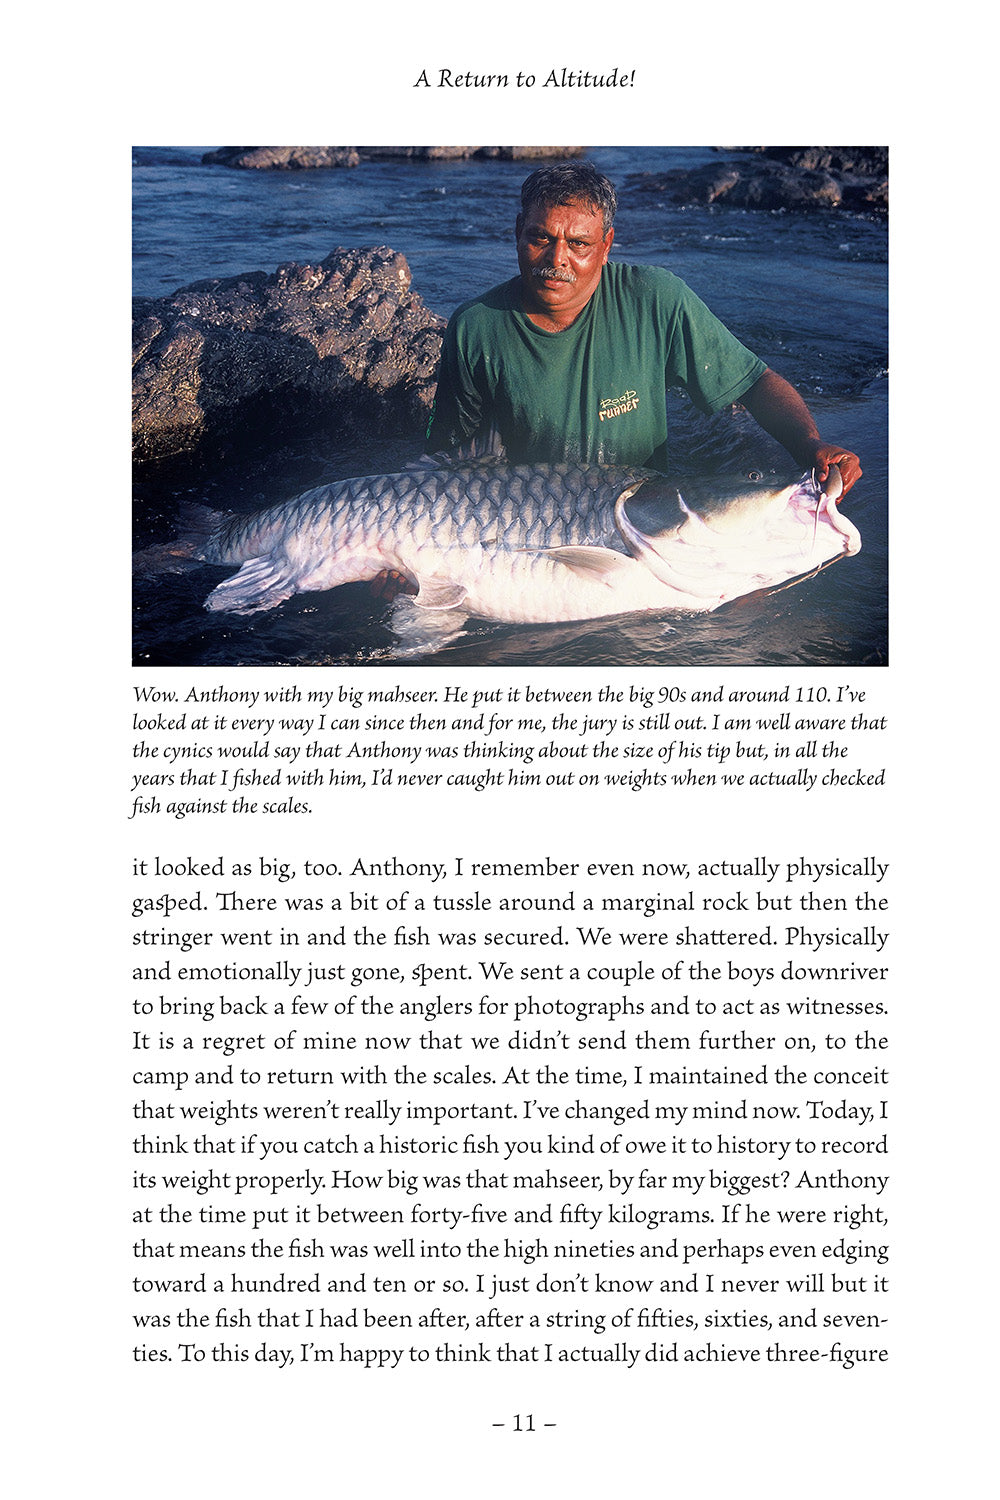 True Tales from an Expert Fisherman